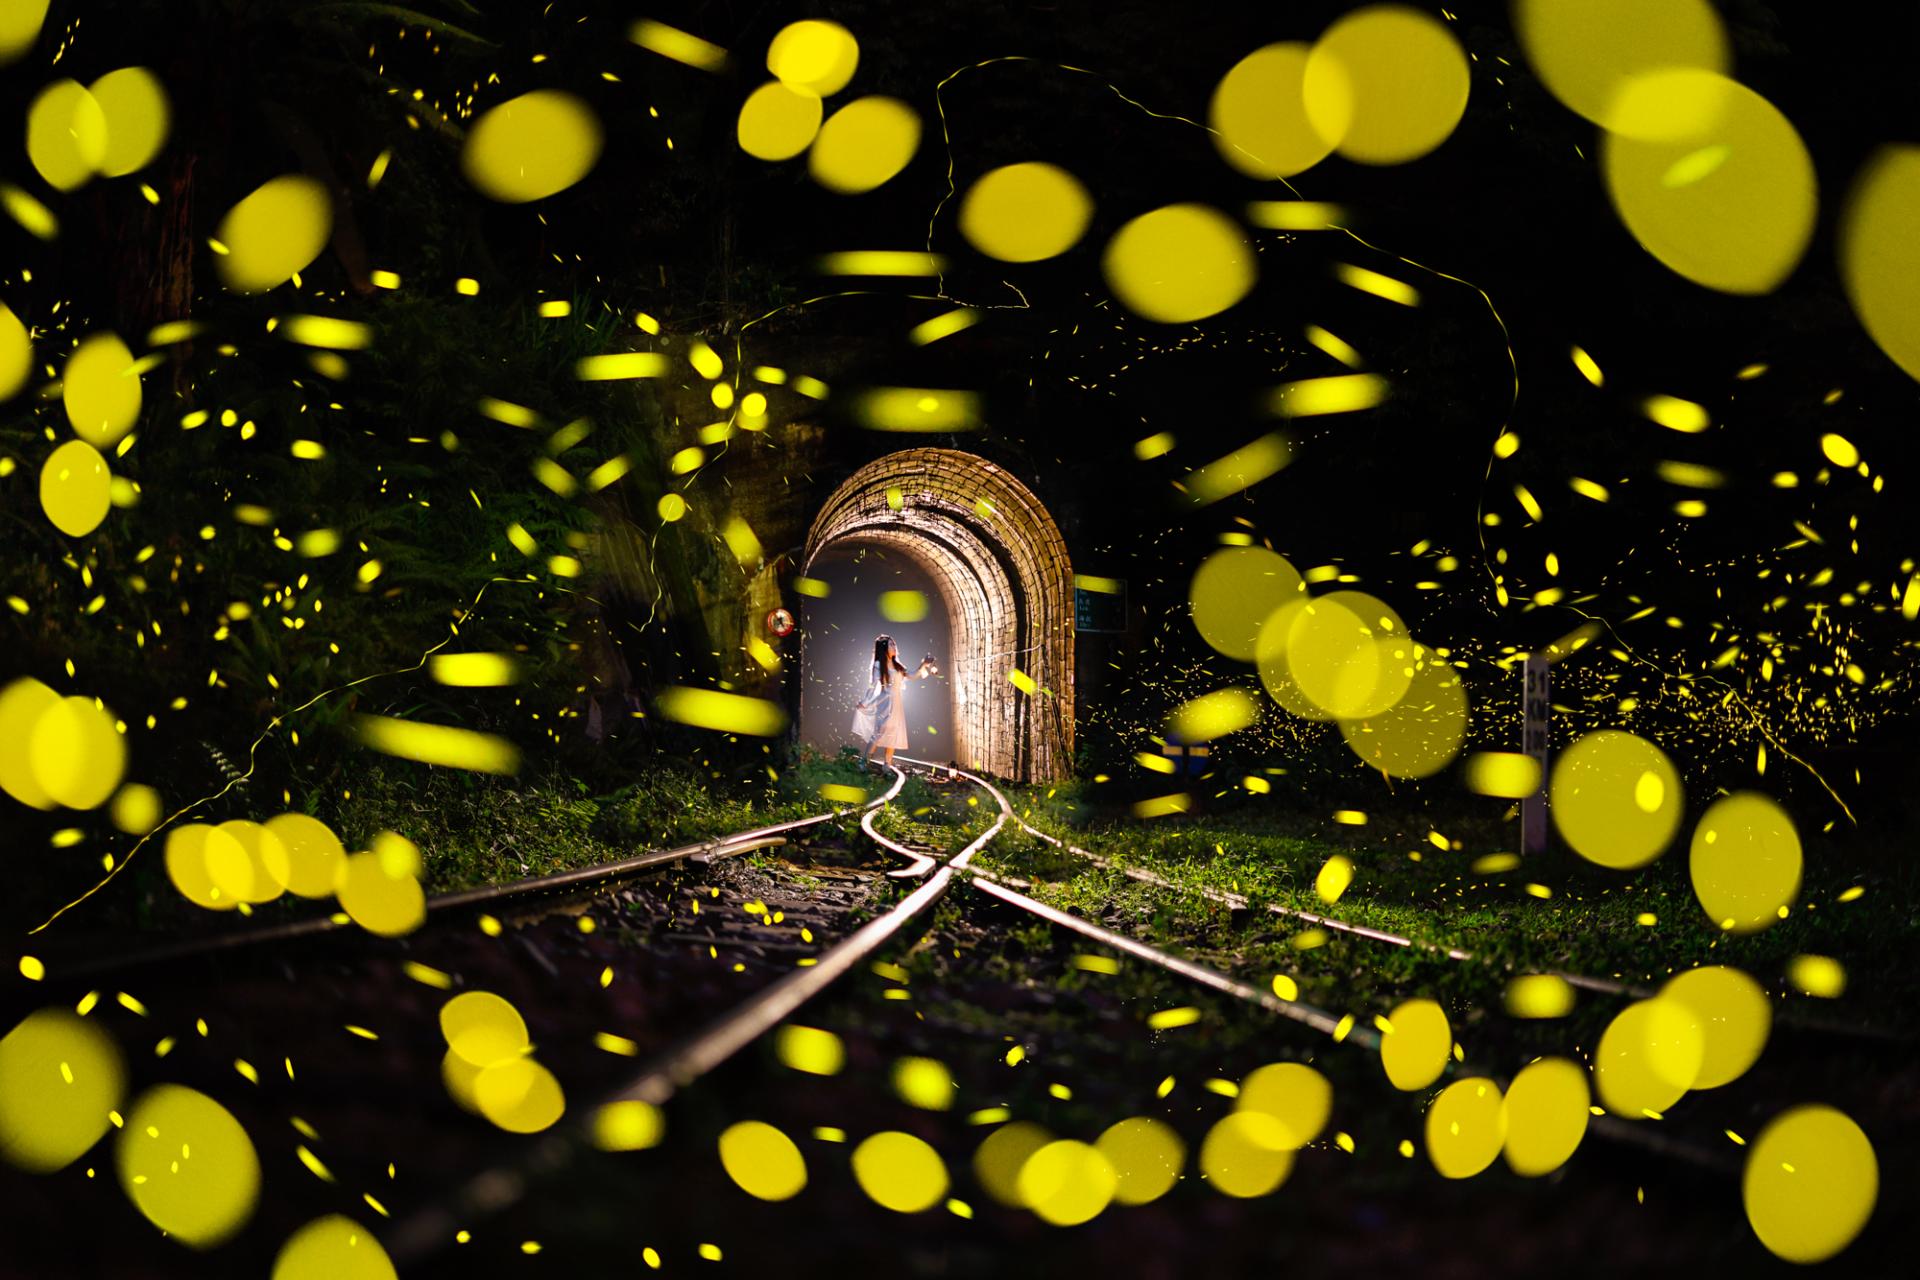 New York Photography Awards Winner - Travel with Fireflies